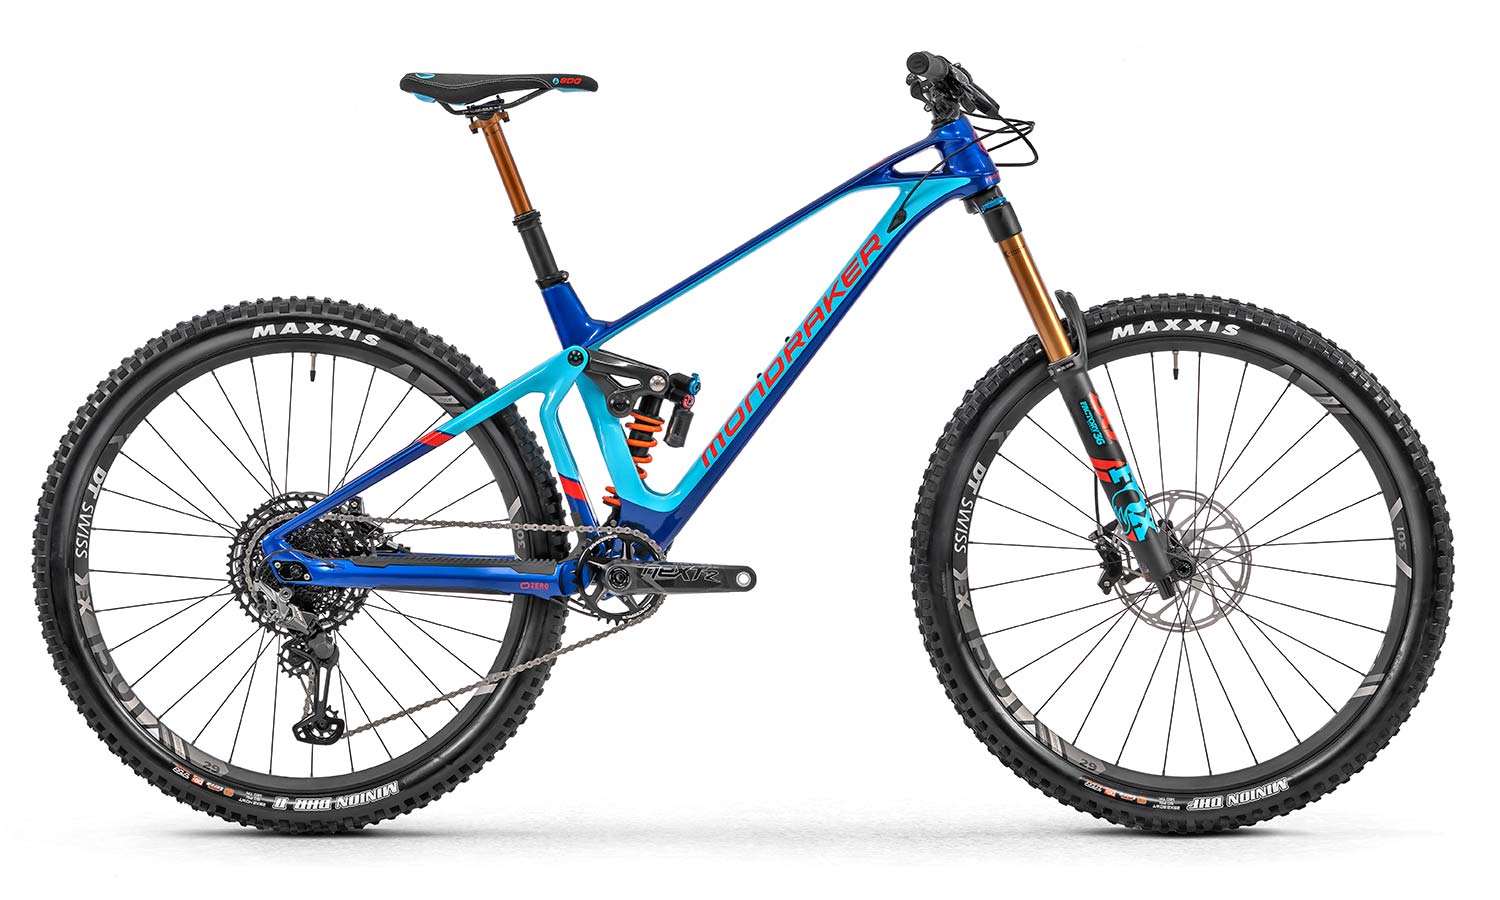 2020 Mondraker Super Foxy Carbon enduro bike, 160mm travel full carbon adjustable enduro 29er mountain bike